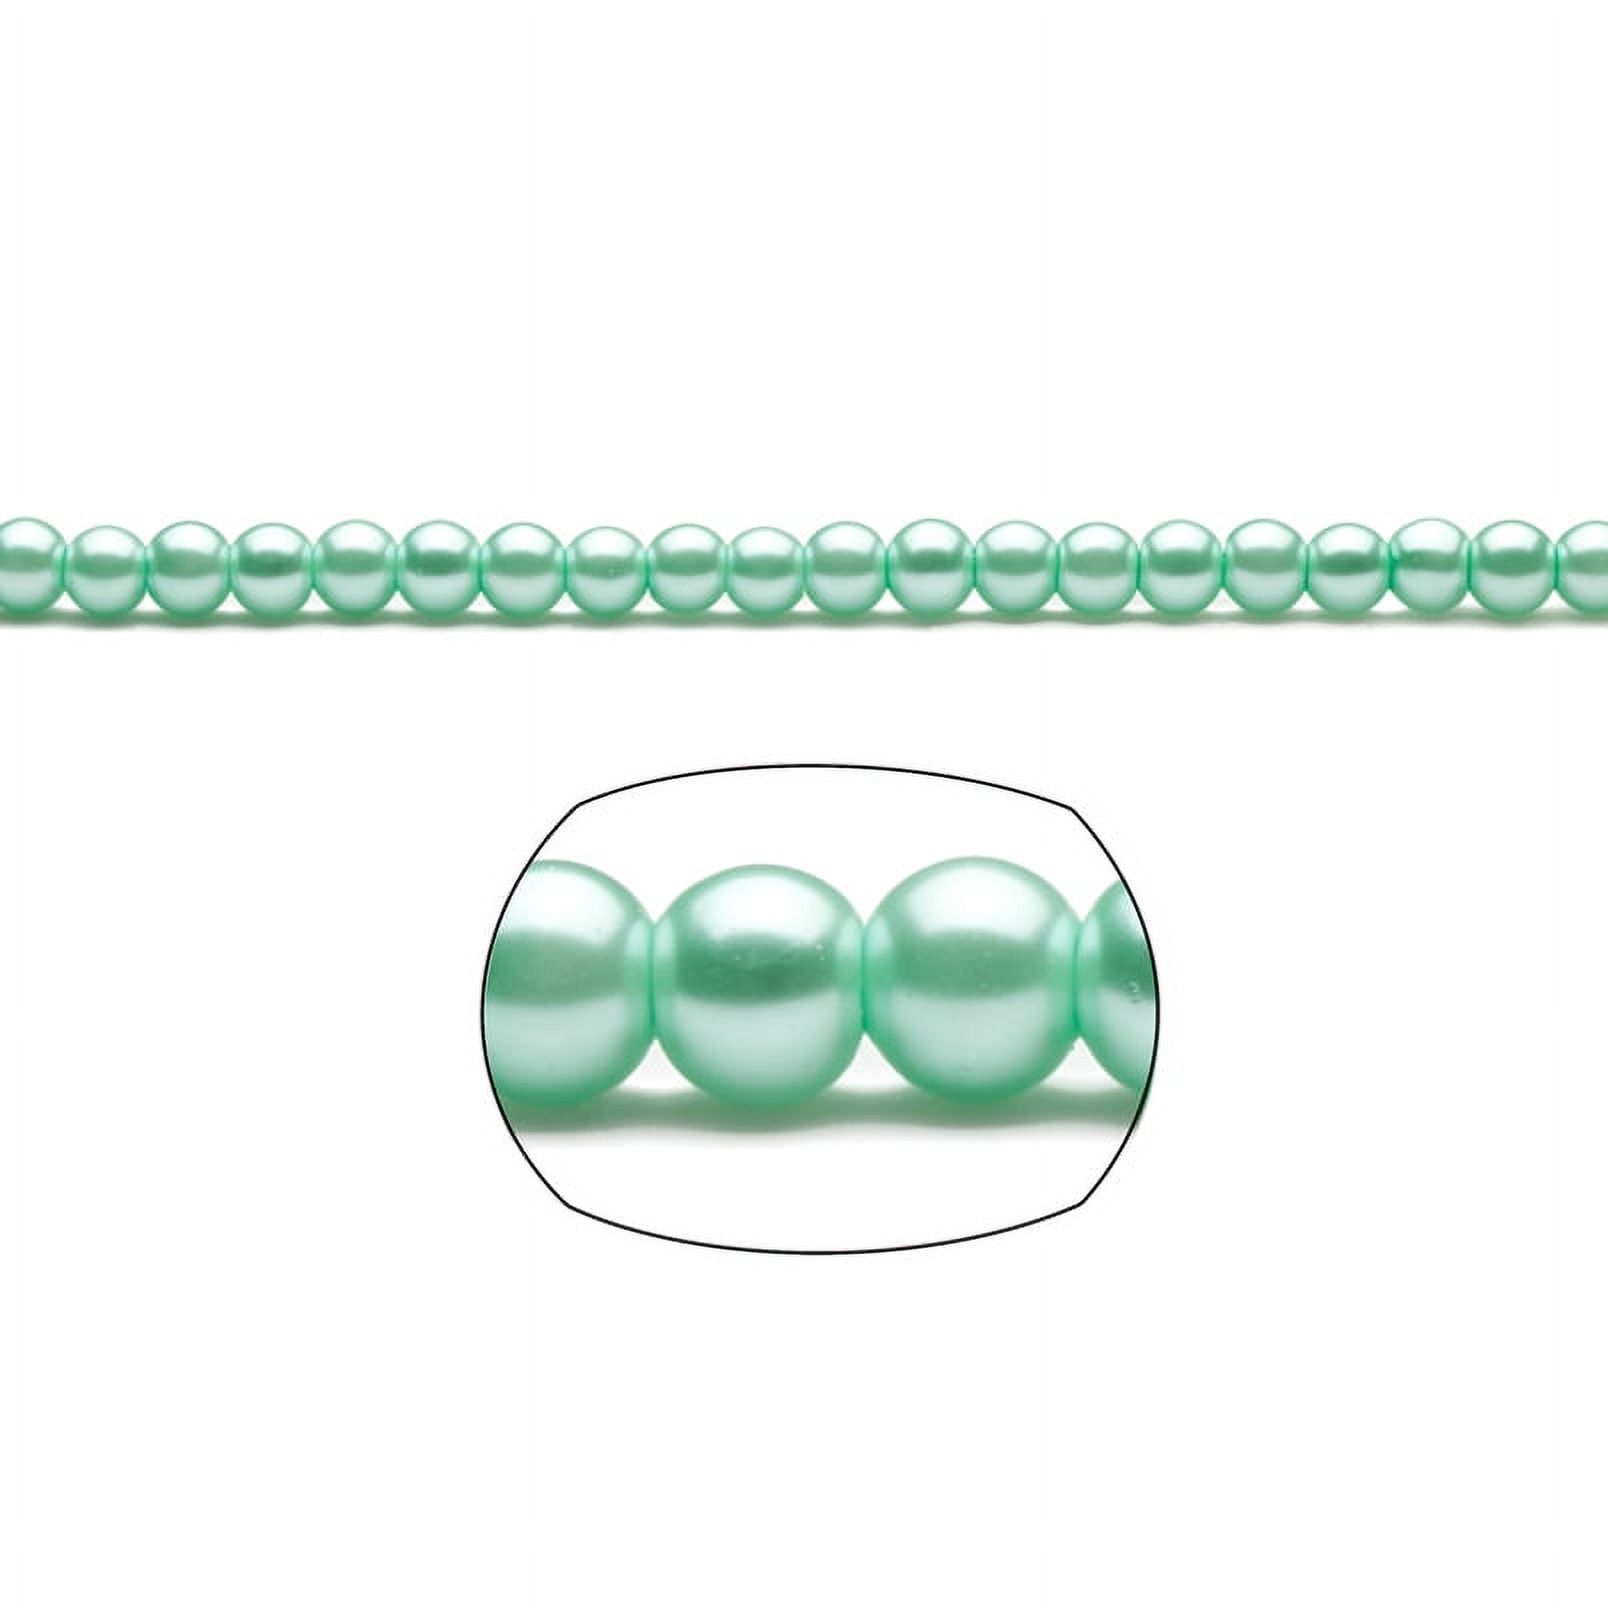 6mm Round Cream-Tone Aquamarine Glass Pearls 2x32Inch Stings 312-Bead Count - image 1 of 1